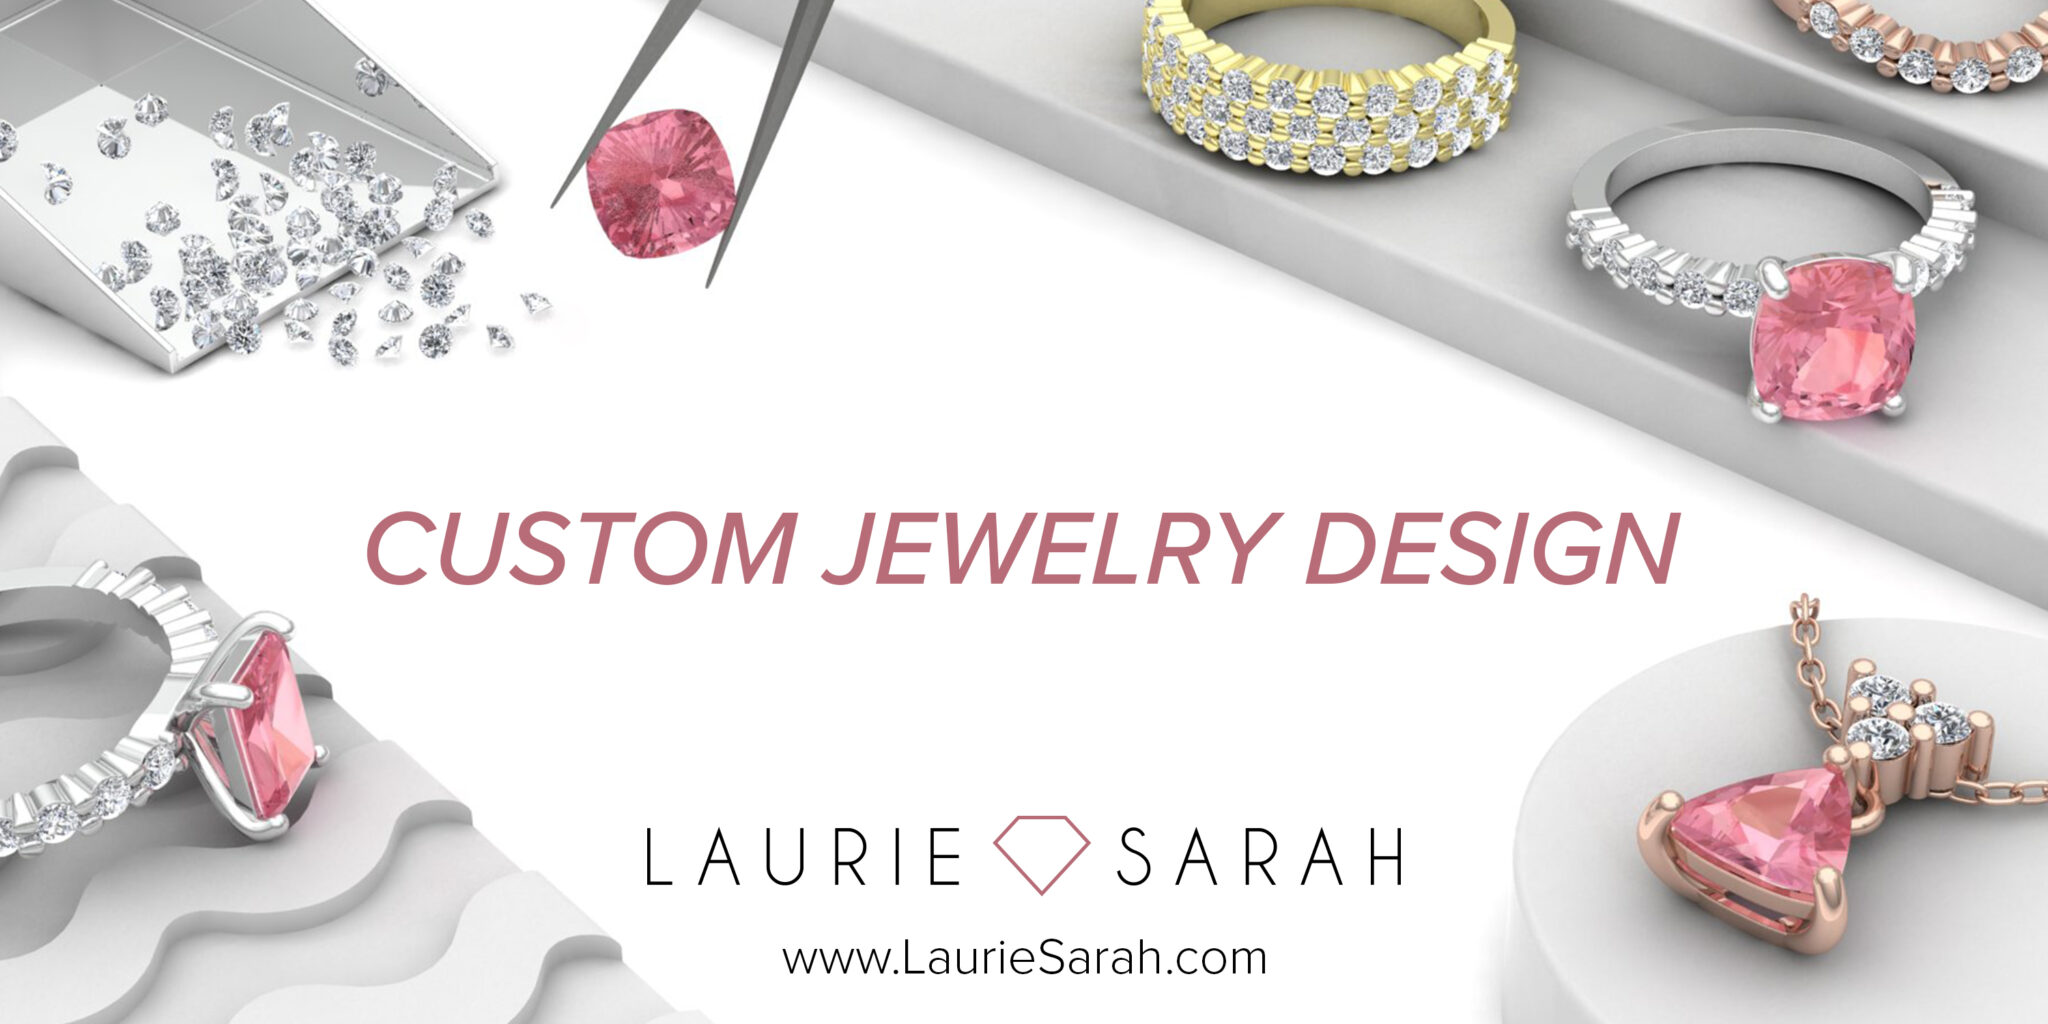 Laurie Sarah Custom Jewelry Designer